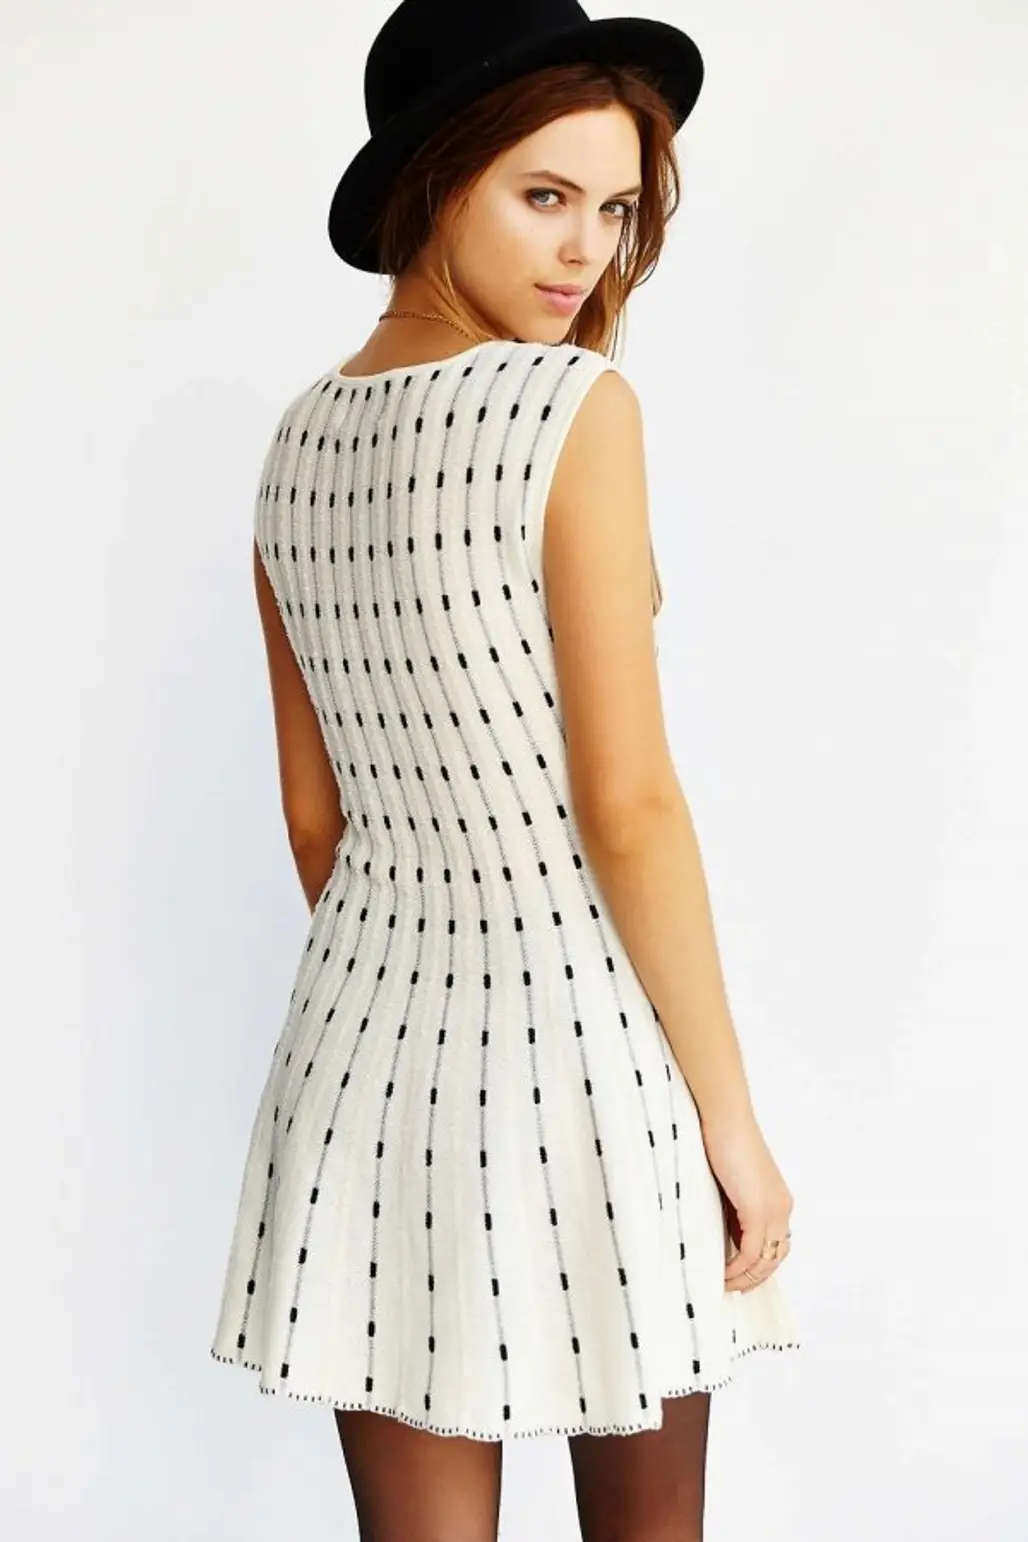 Urban Outfitters JOA Knit Dot Print Dress